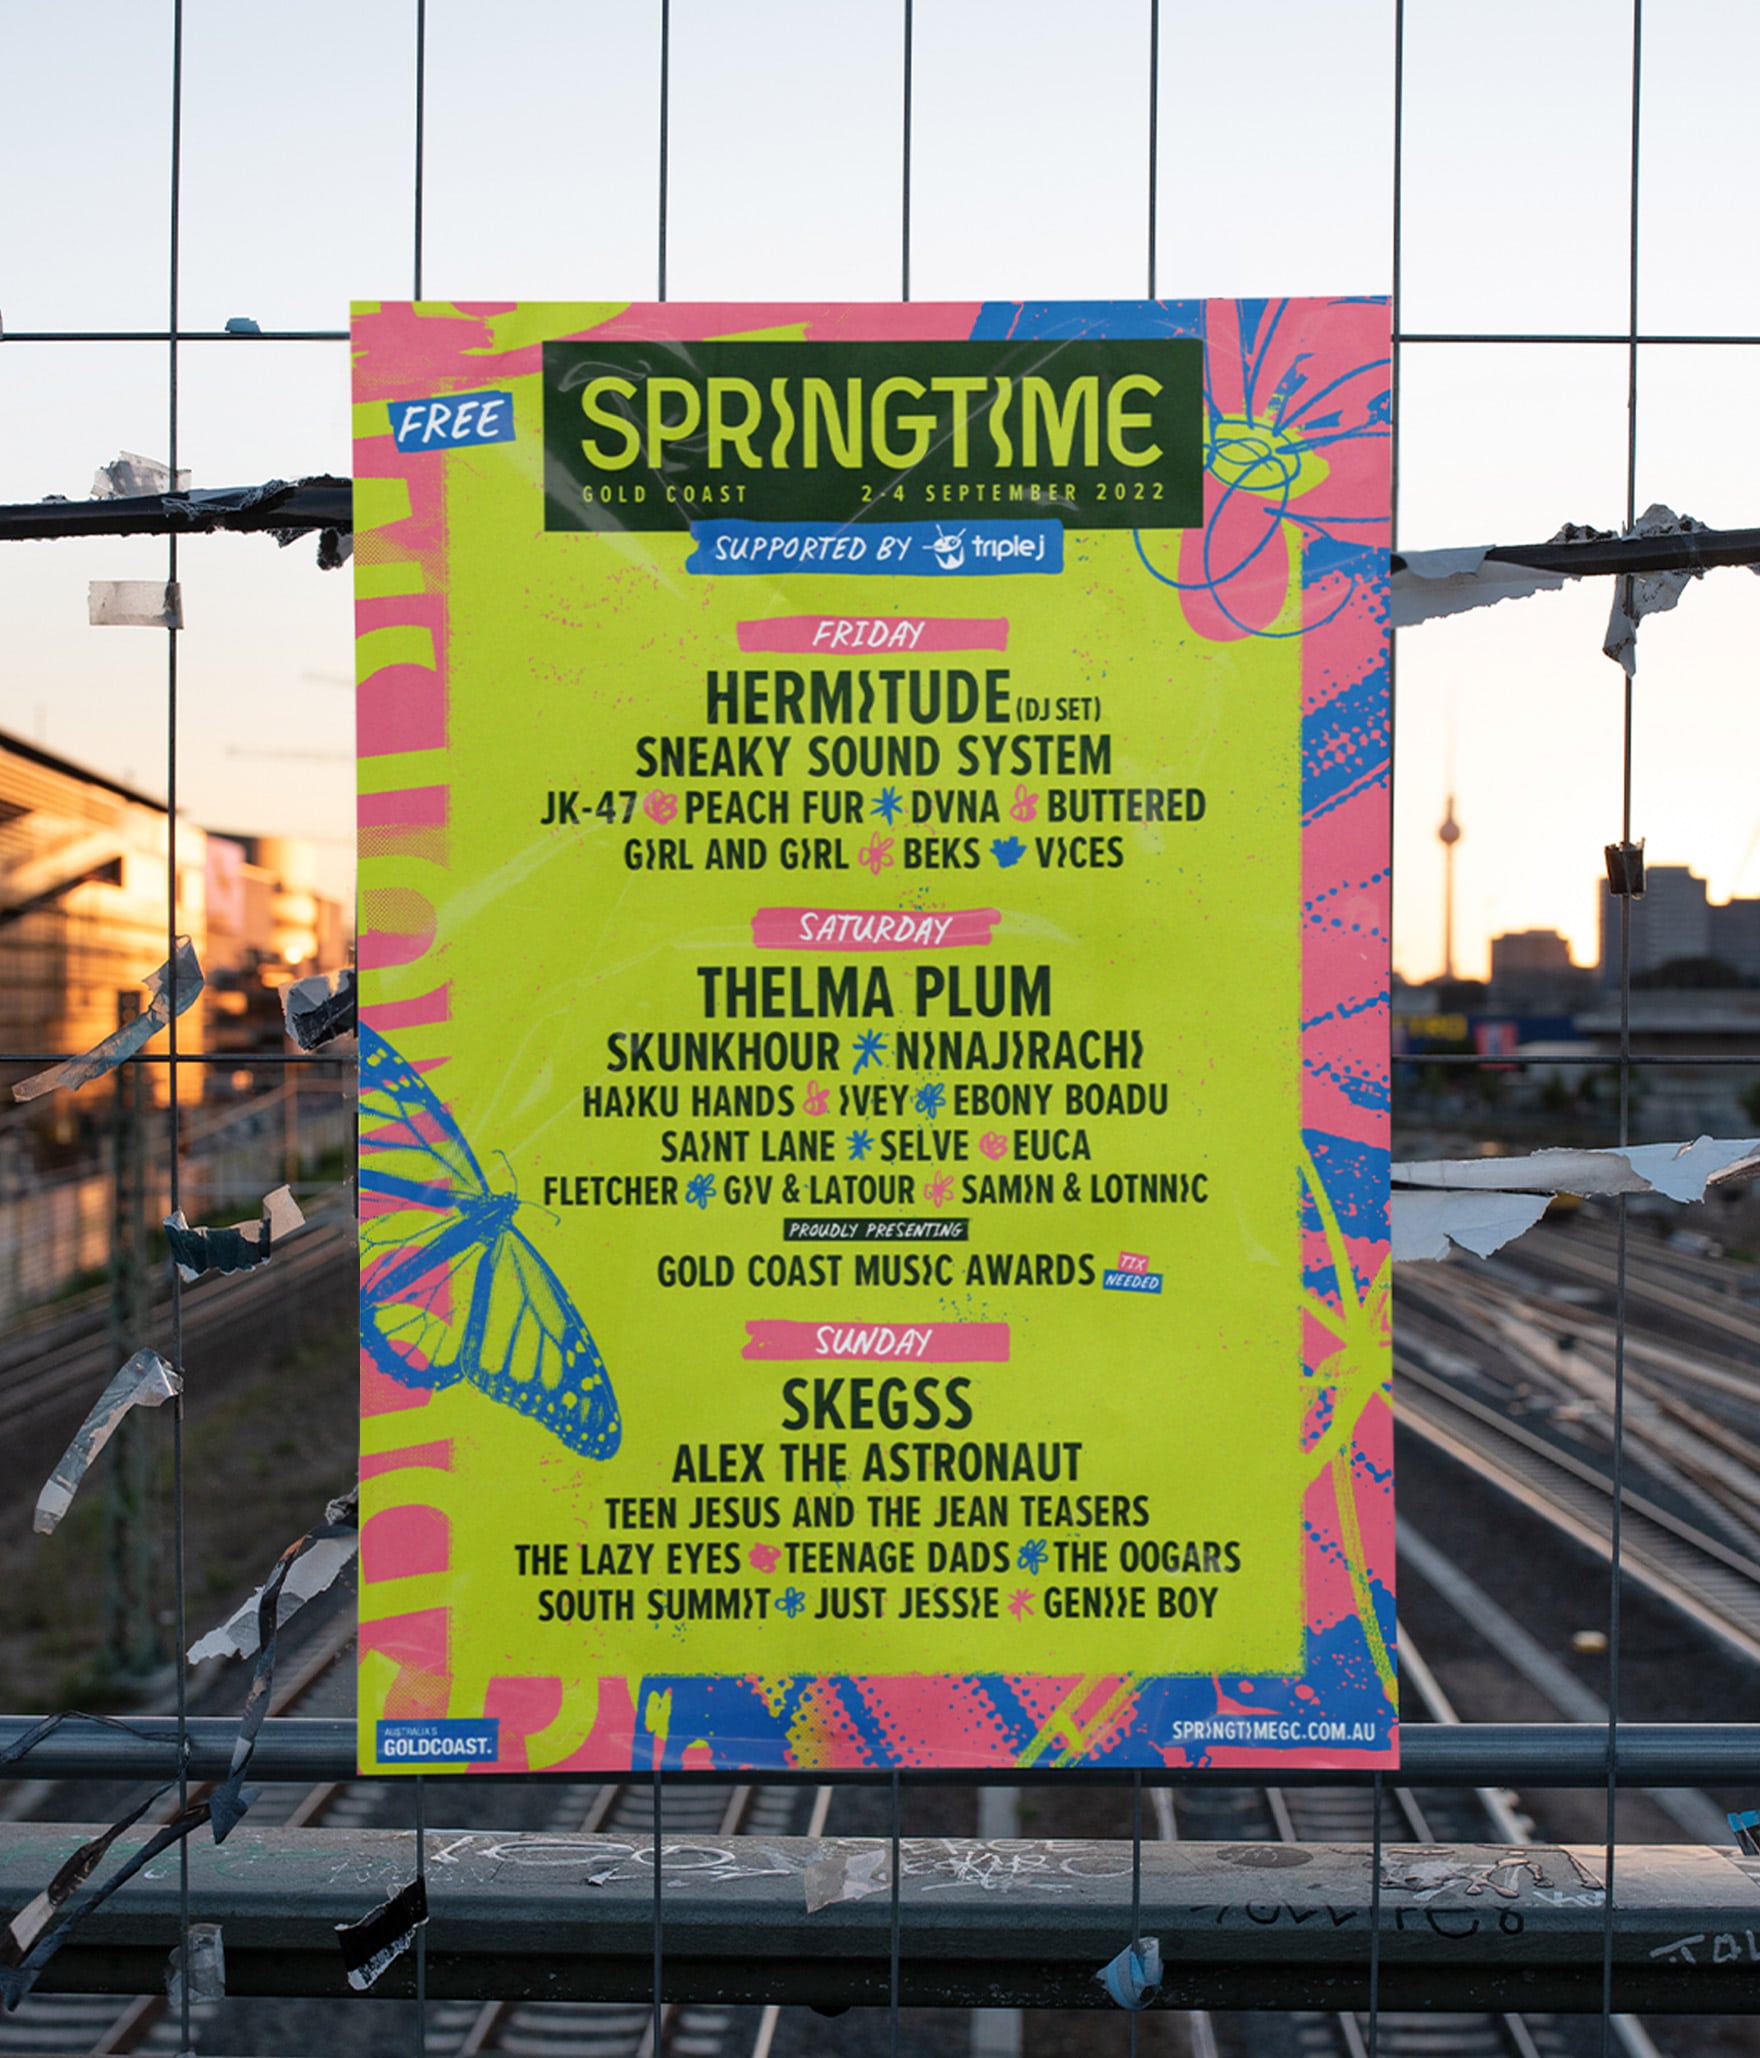 Image of the Springtime Festival Poster with setlist on it for SpringTime Festival Gold Coast 2-4 September 2022